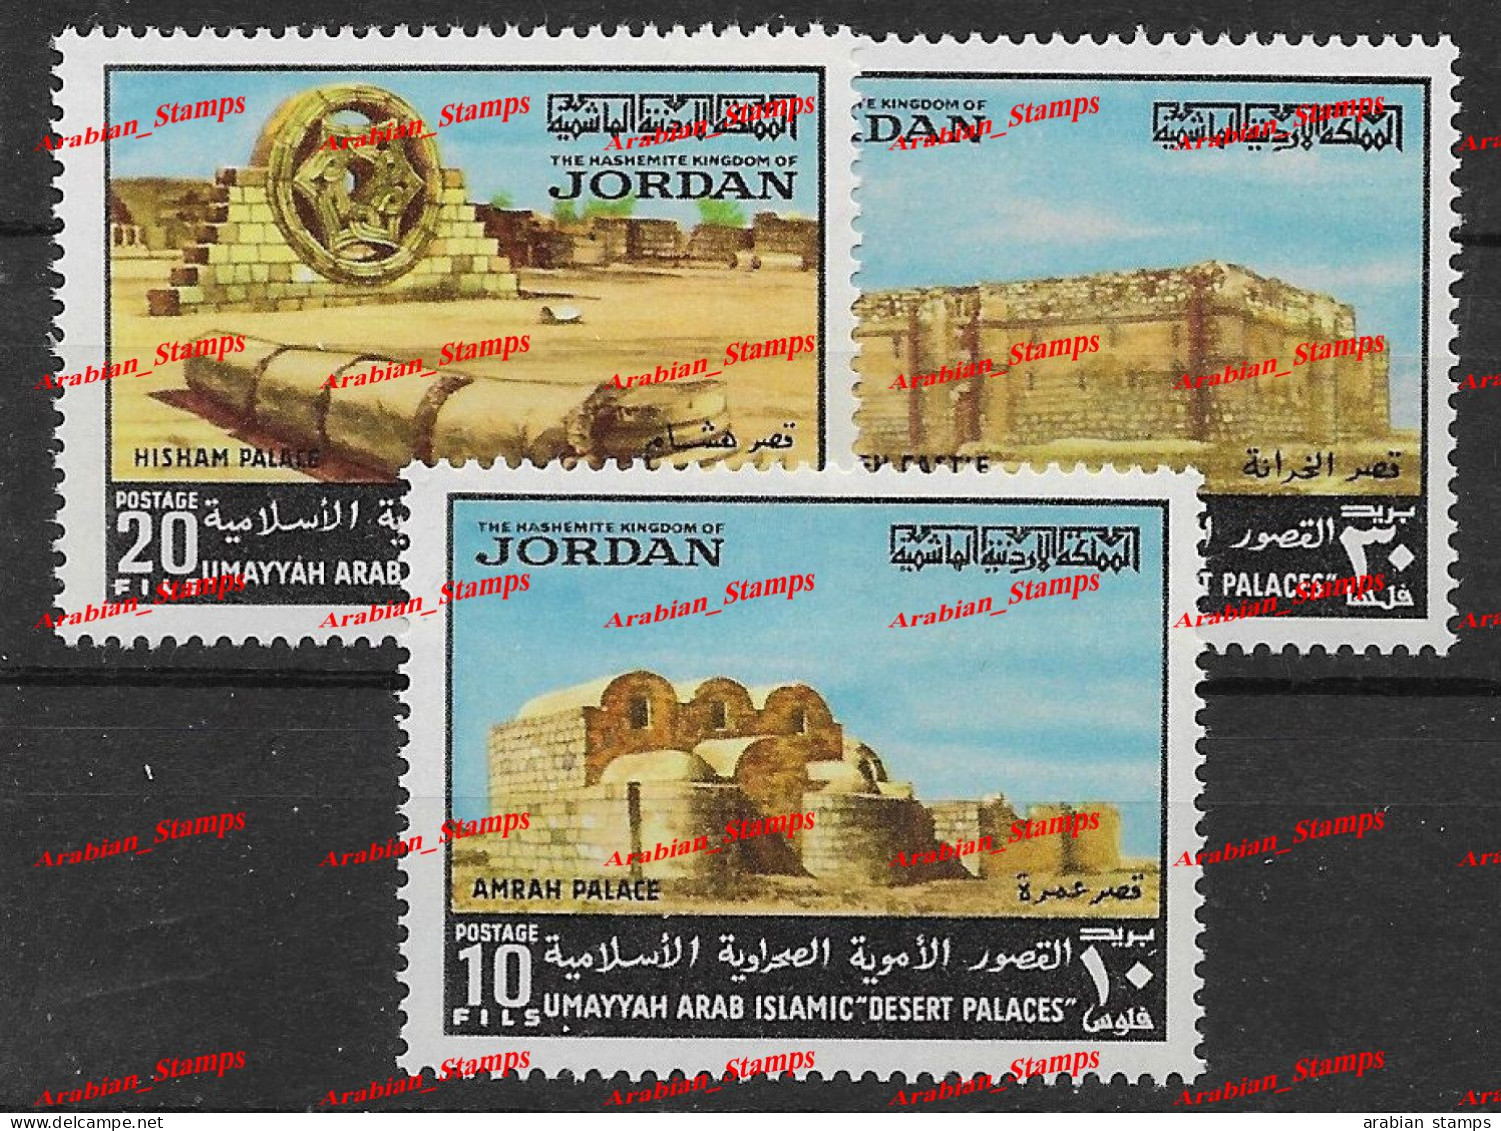 HASHIMATE KINGDOM OF JORDAN JORDANIE 1974 MNH DESERT RUINS DESERT PALACES MONUMENTS AMRA PALACE KHARRANEH CASTLE - Jordanie